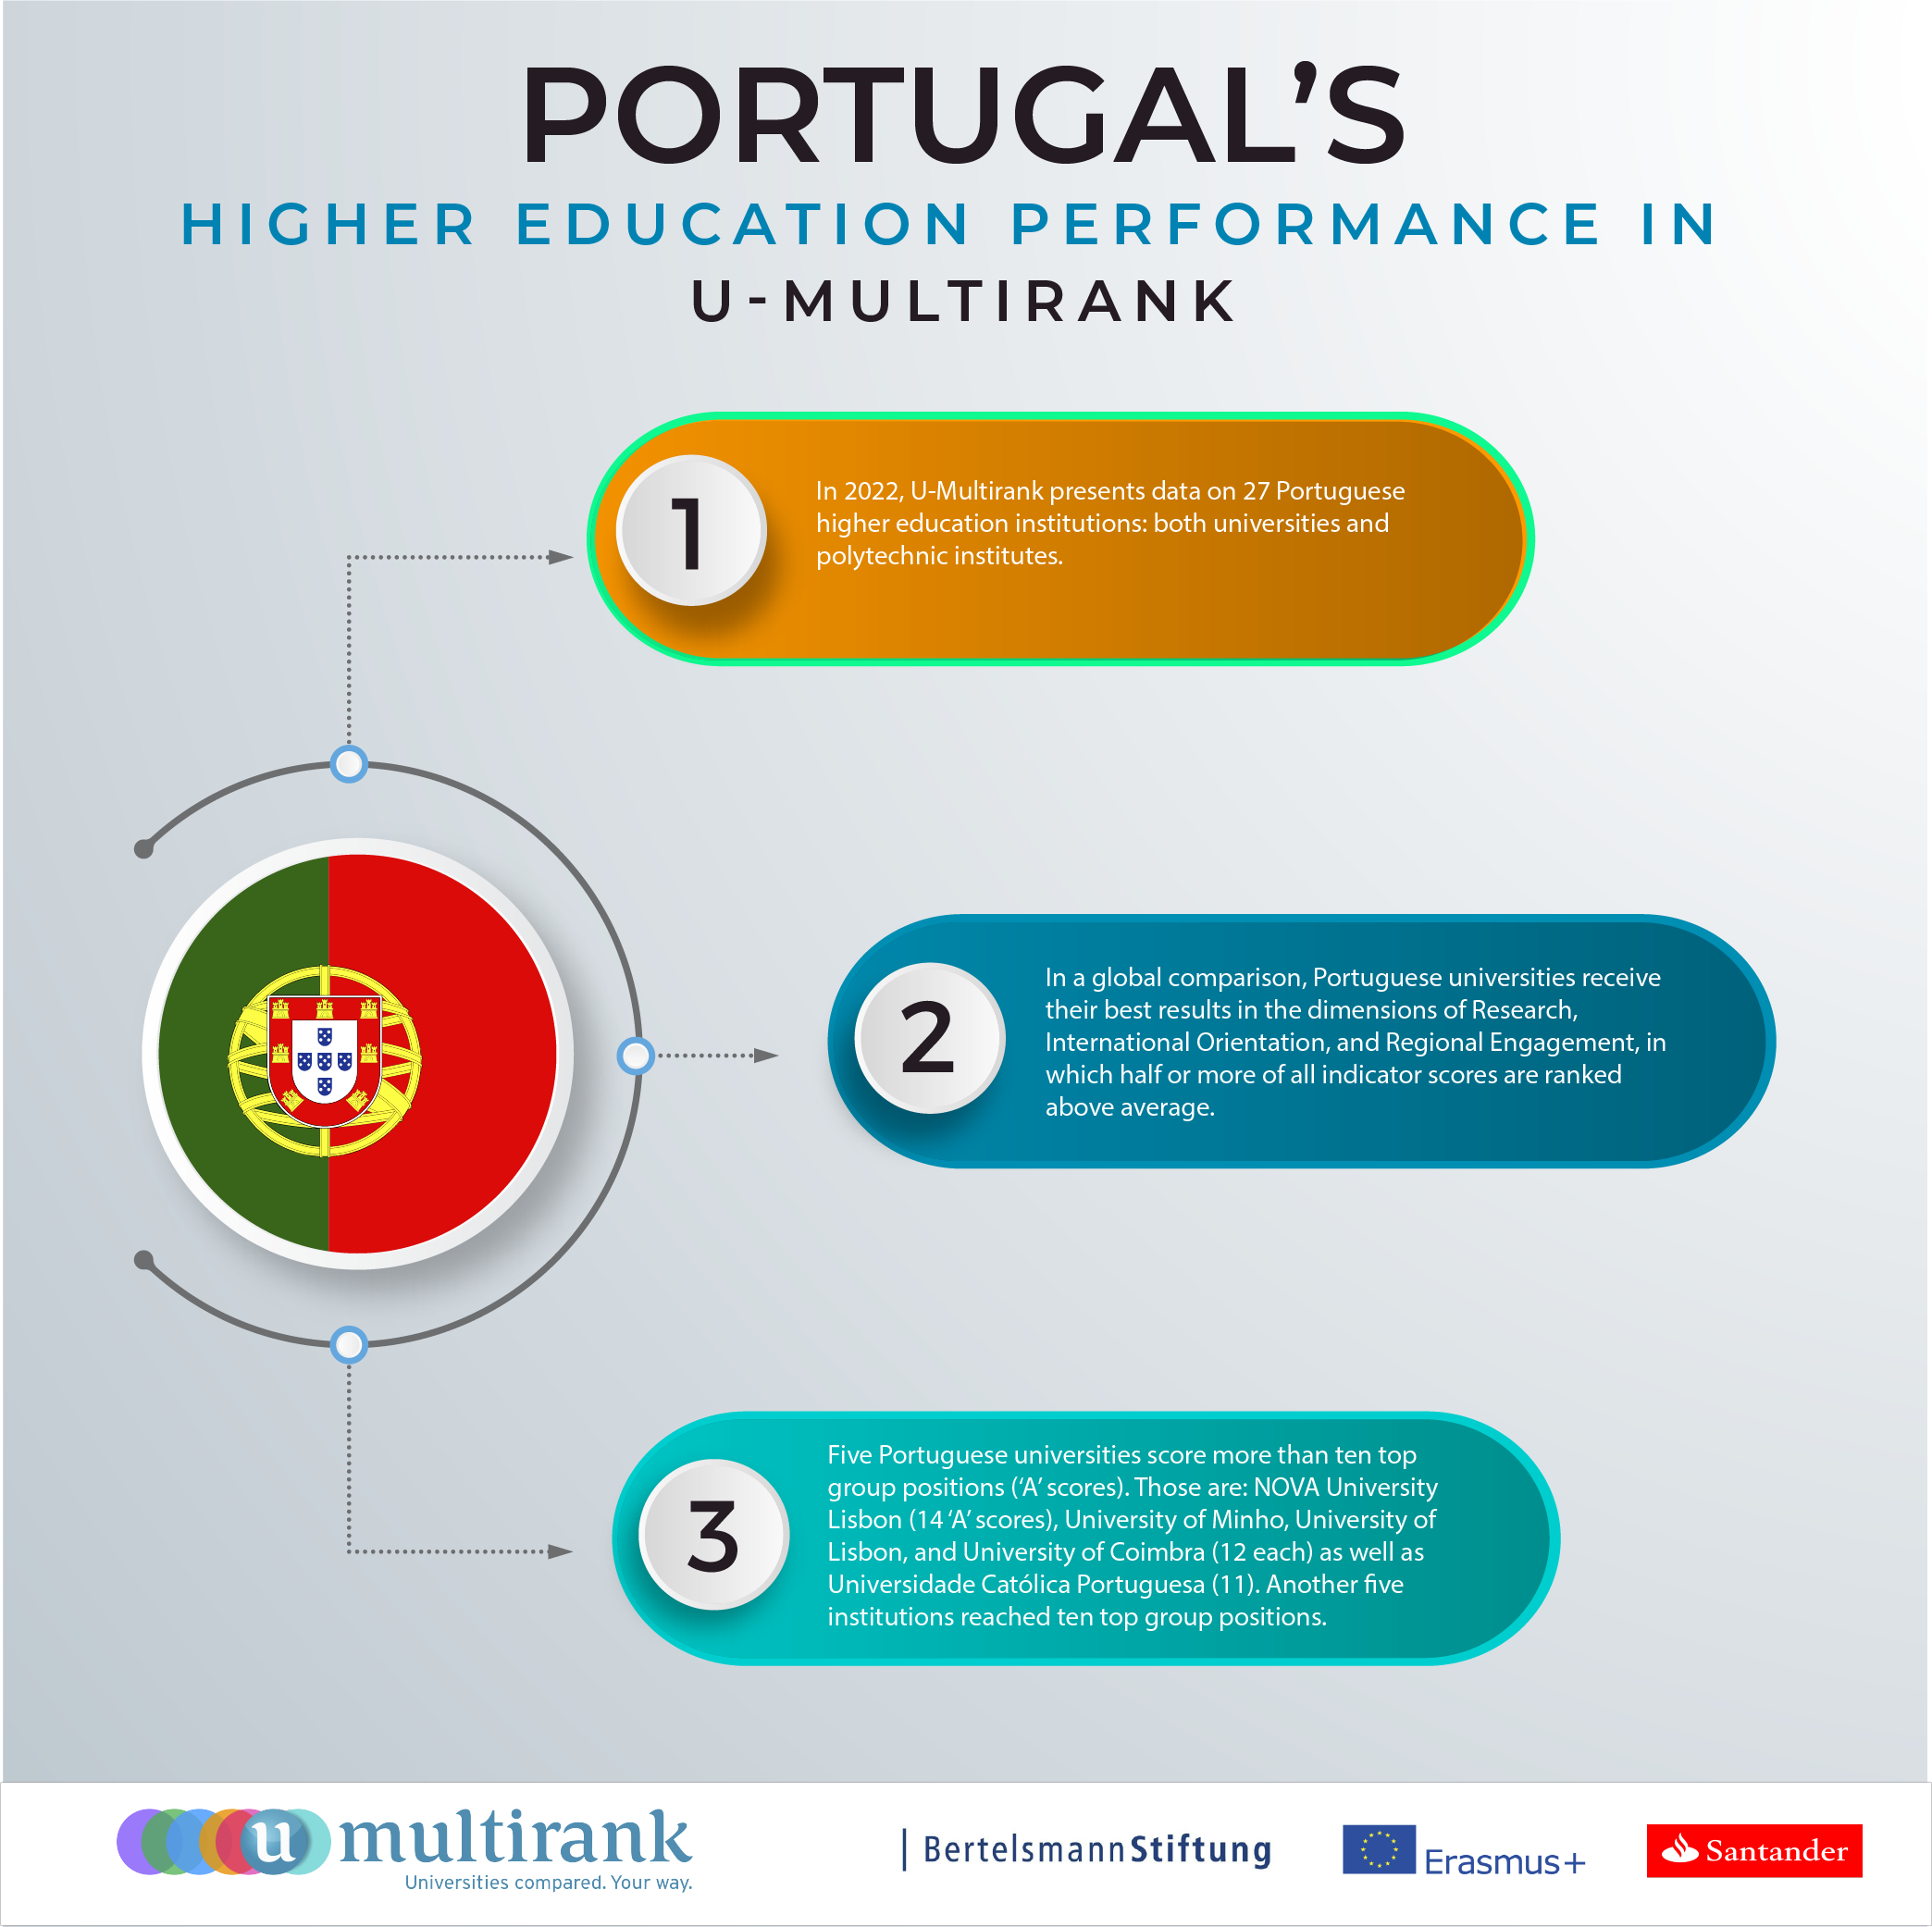 Portugal's Higher Education Performance in U-Multirank